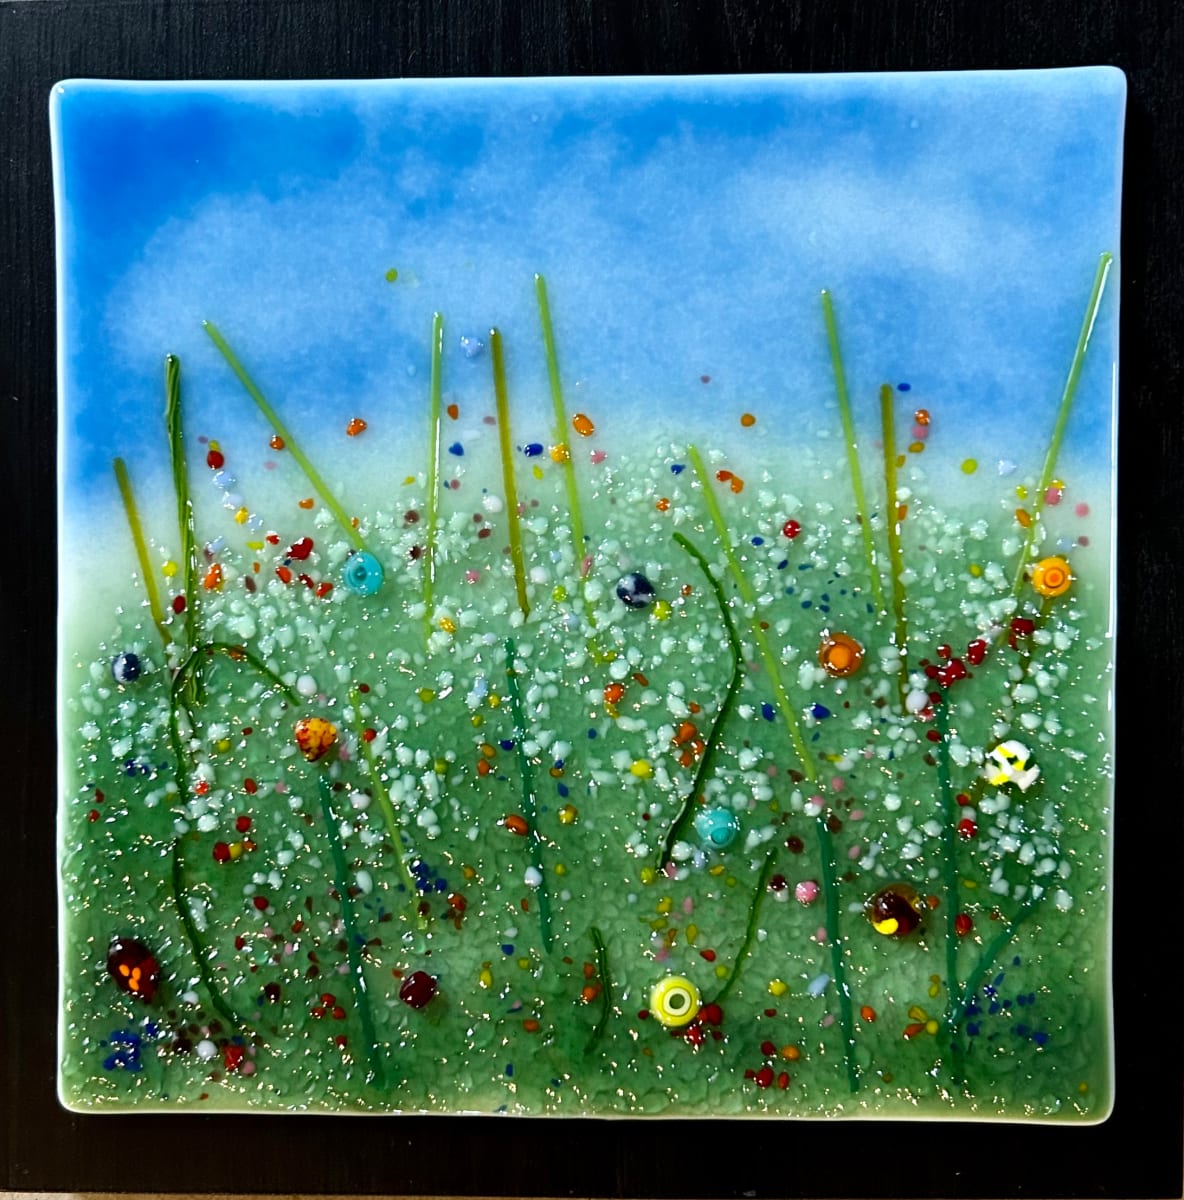 Spring Meadow Series by Cindy Cherrington 